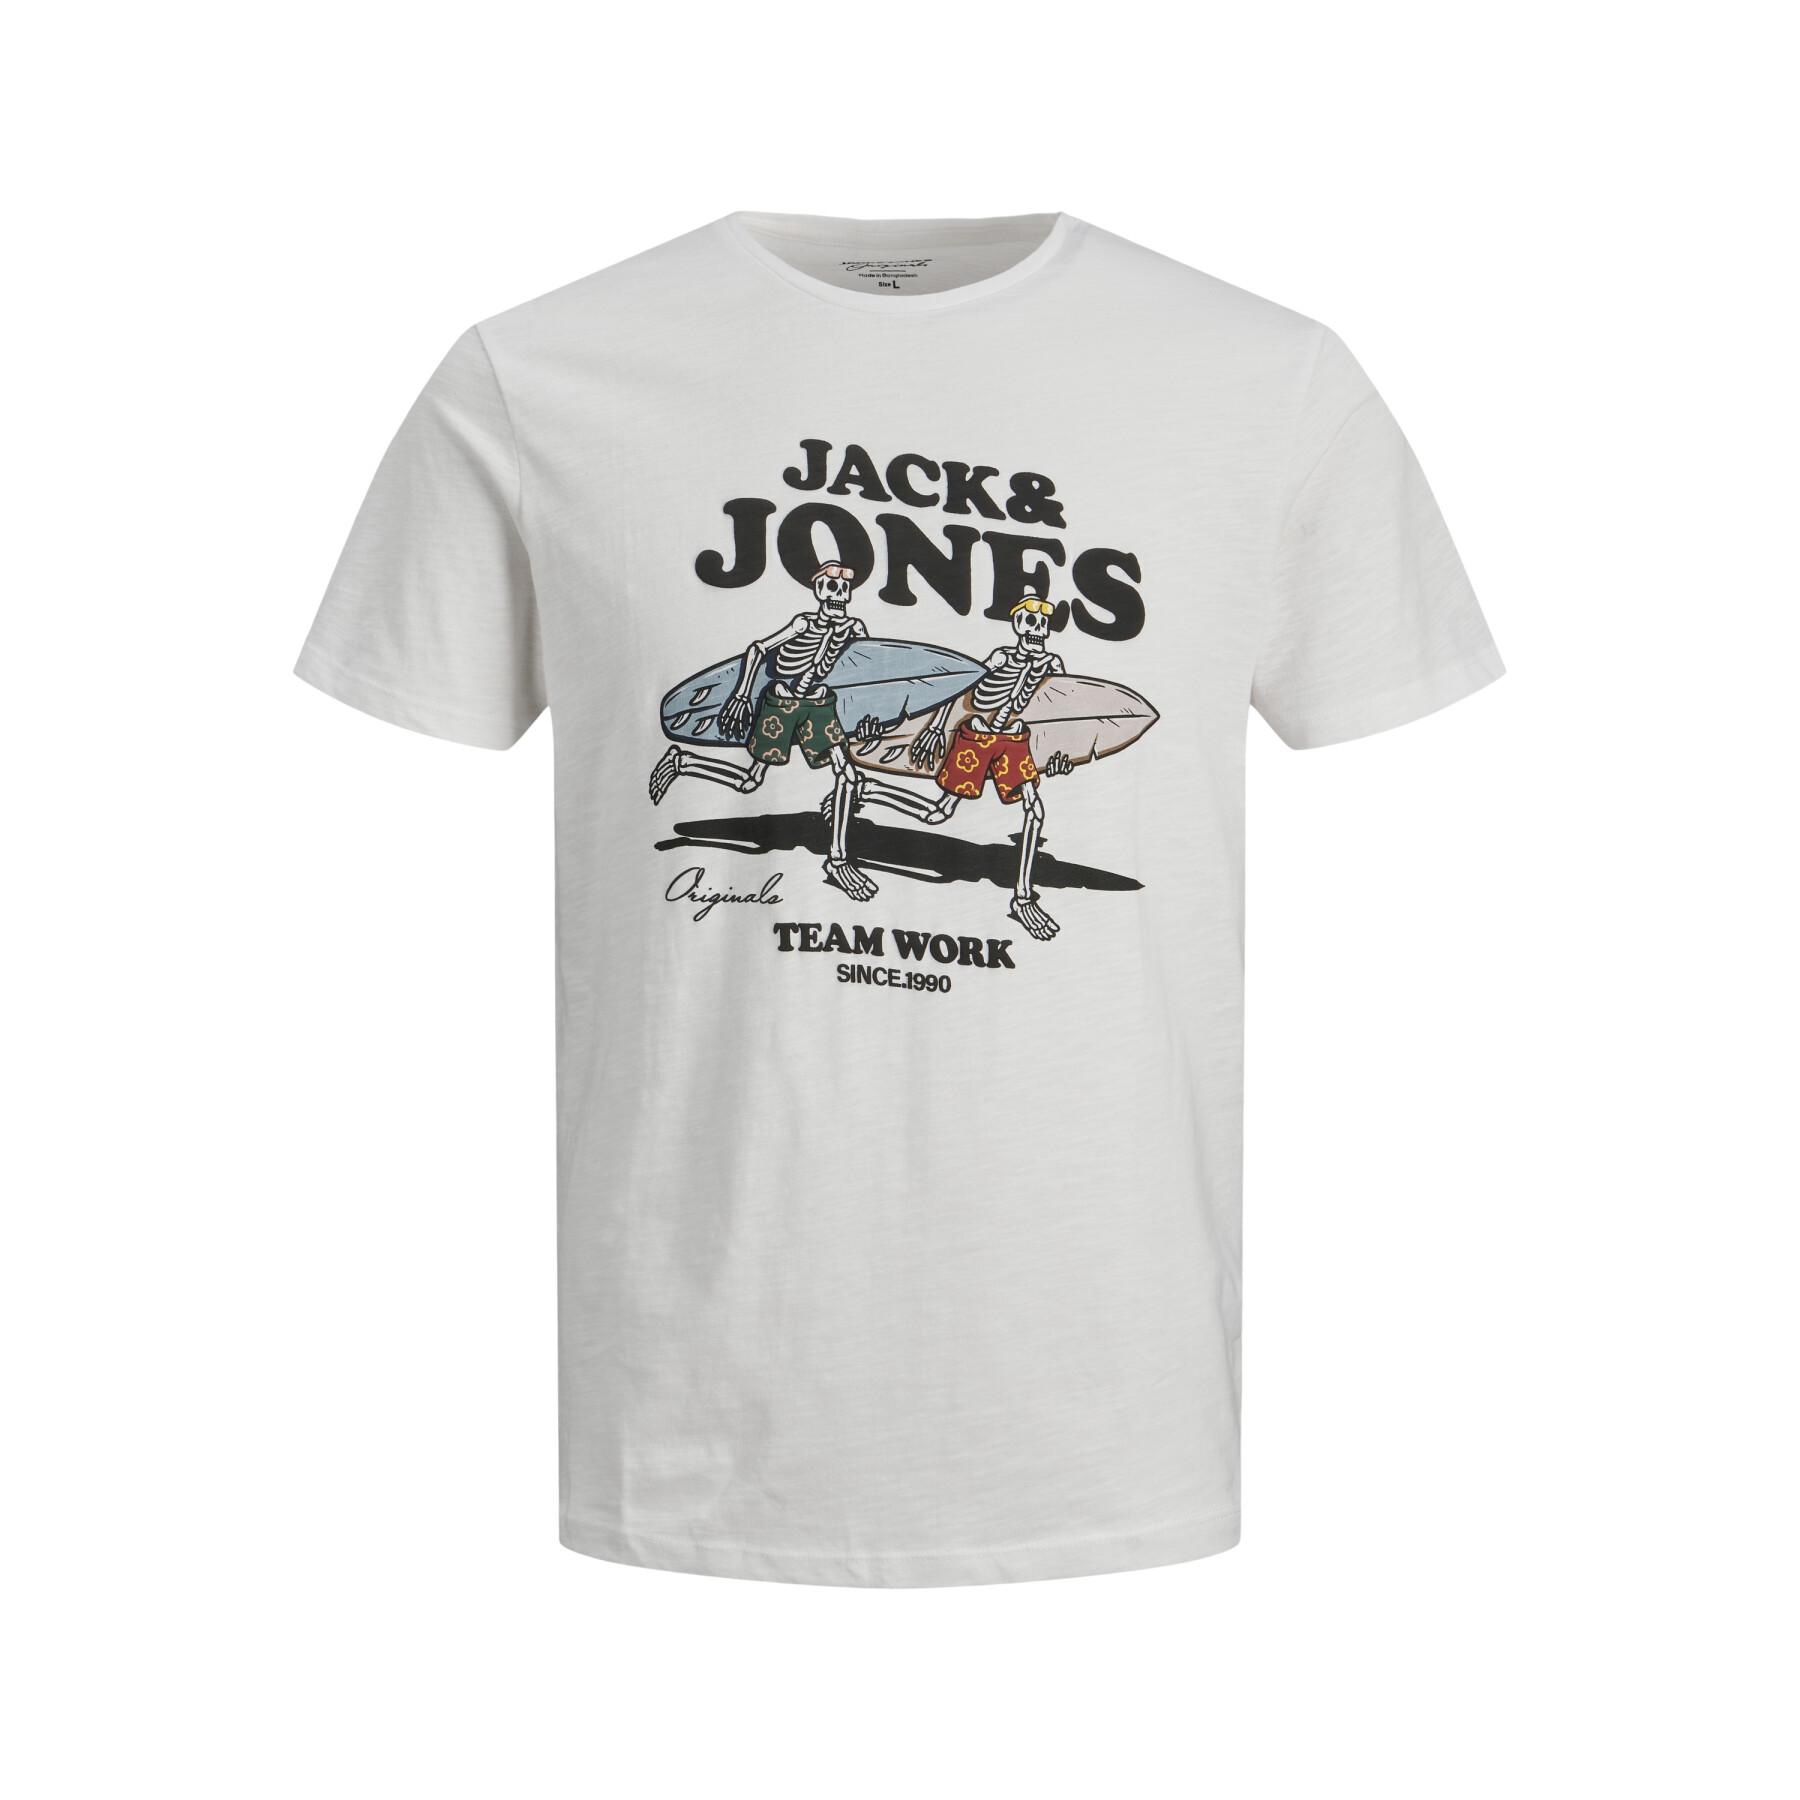 Kinder-T-shirt Jack & Jones Venice Bones